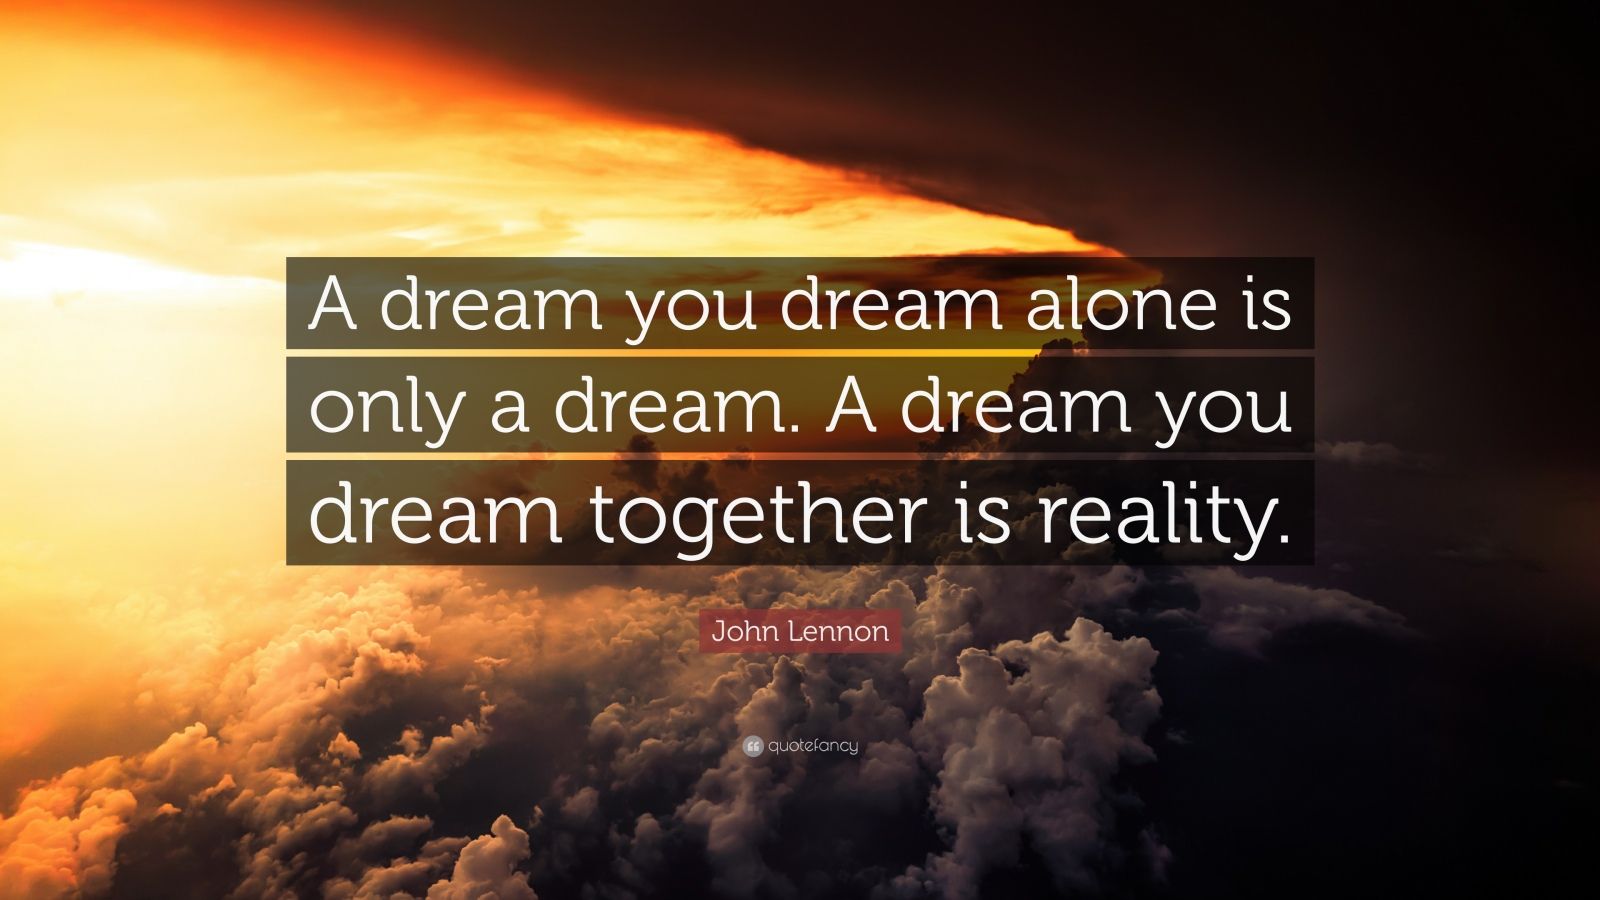 1701748 John Lennon Quote A dream you dream alone is only a dream A dream